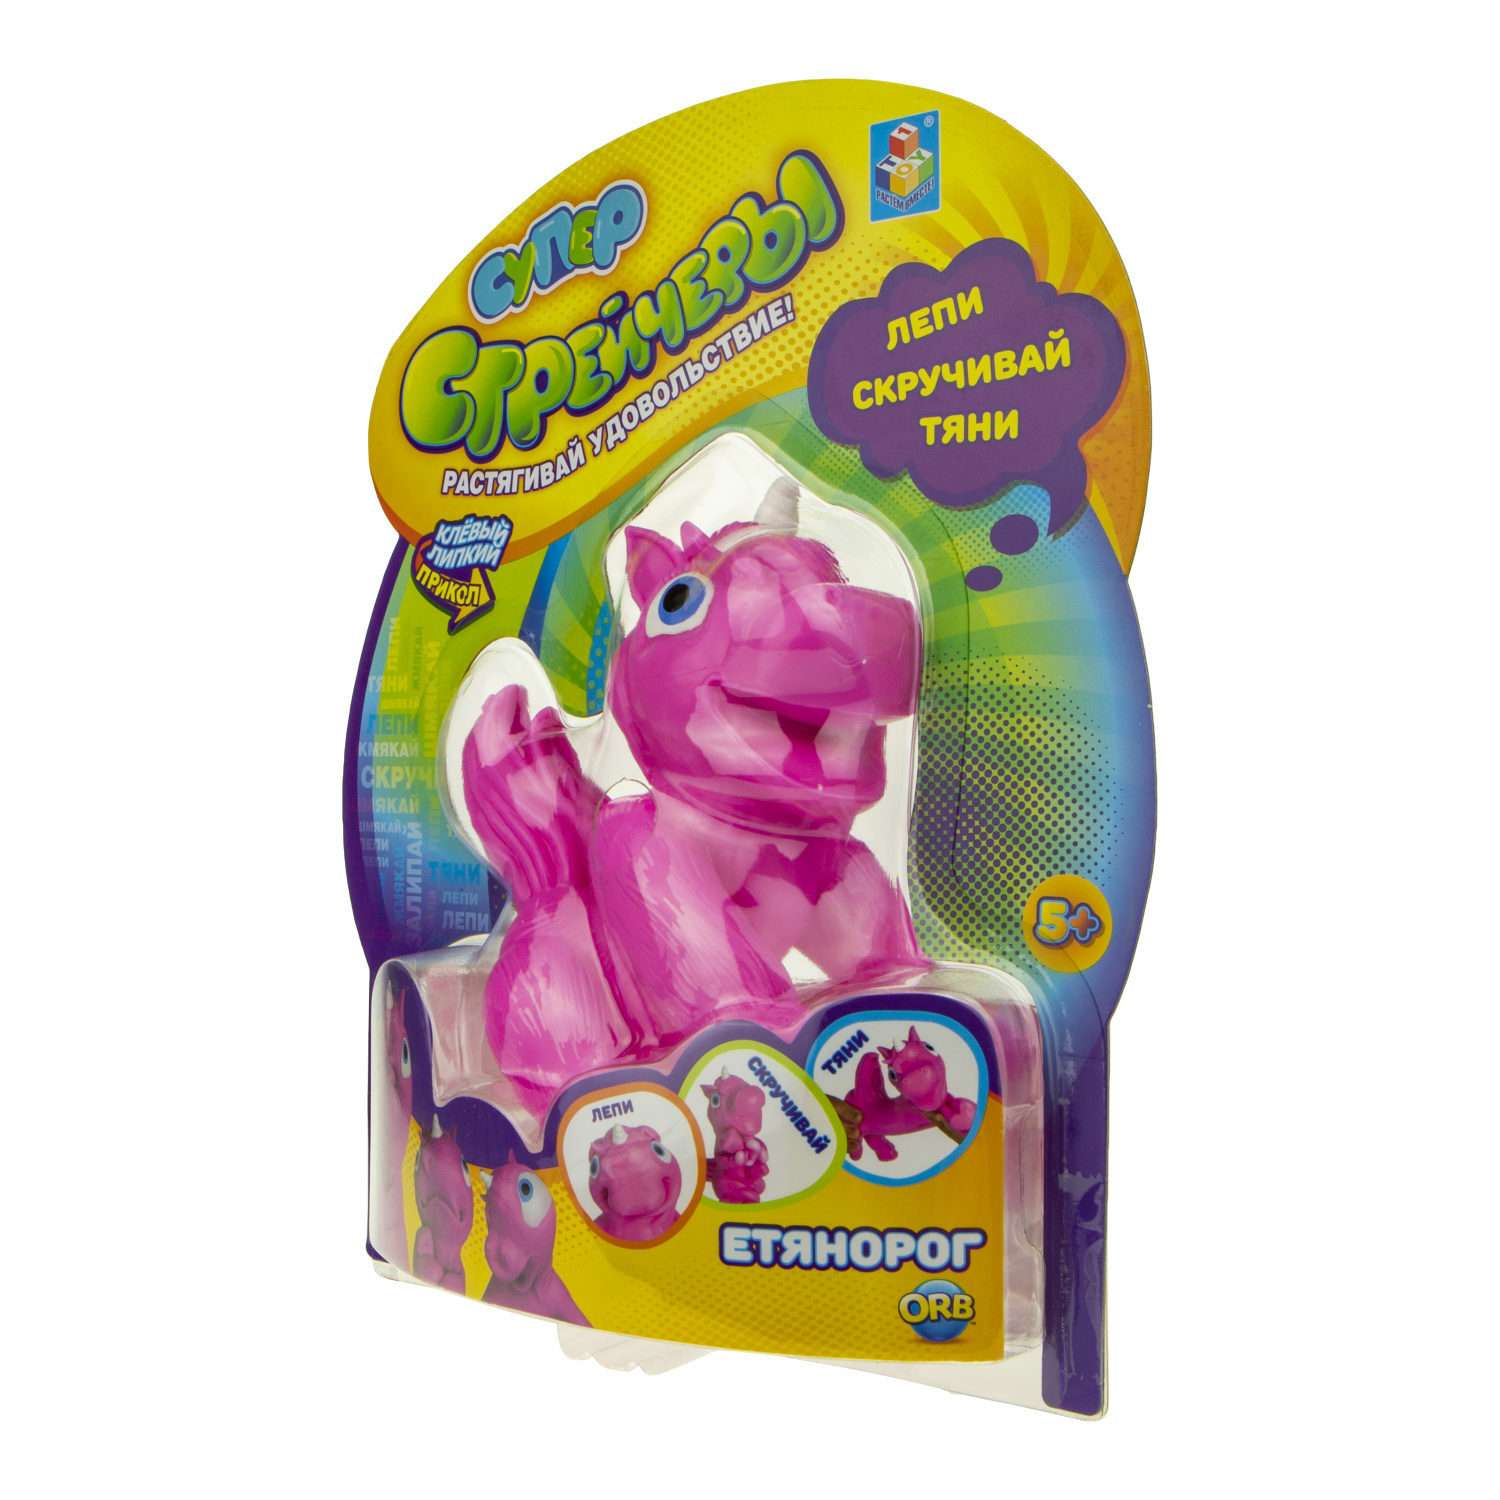 Фигурка Супер стрейчеры Етянорог тянущаяся игрушка блистер 16см розовый - фото 6